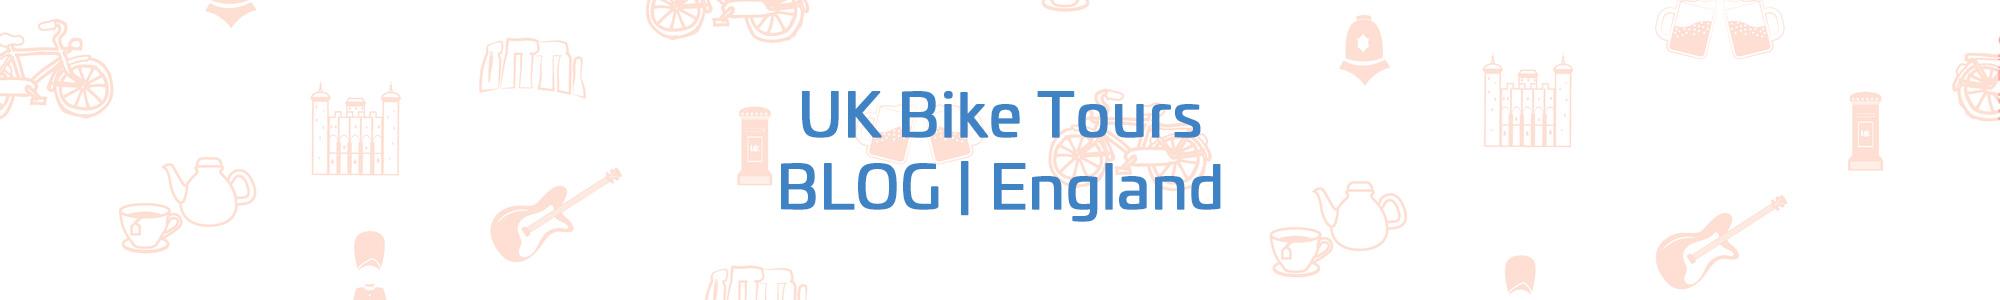 UK Bike Tours Blog - England